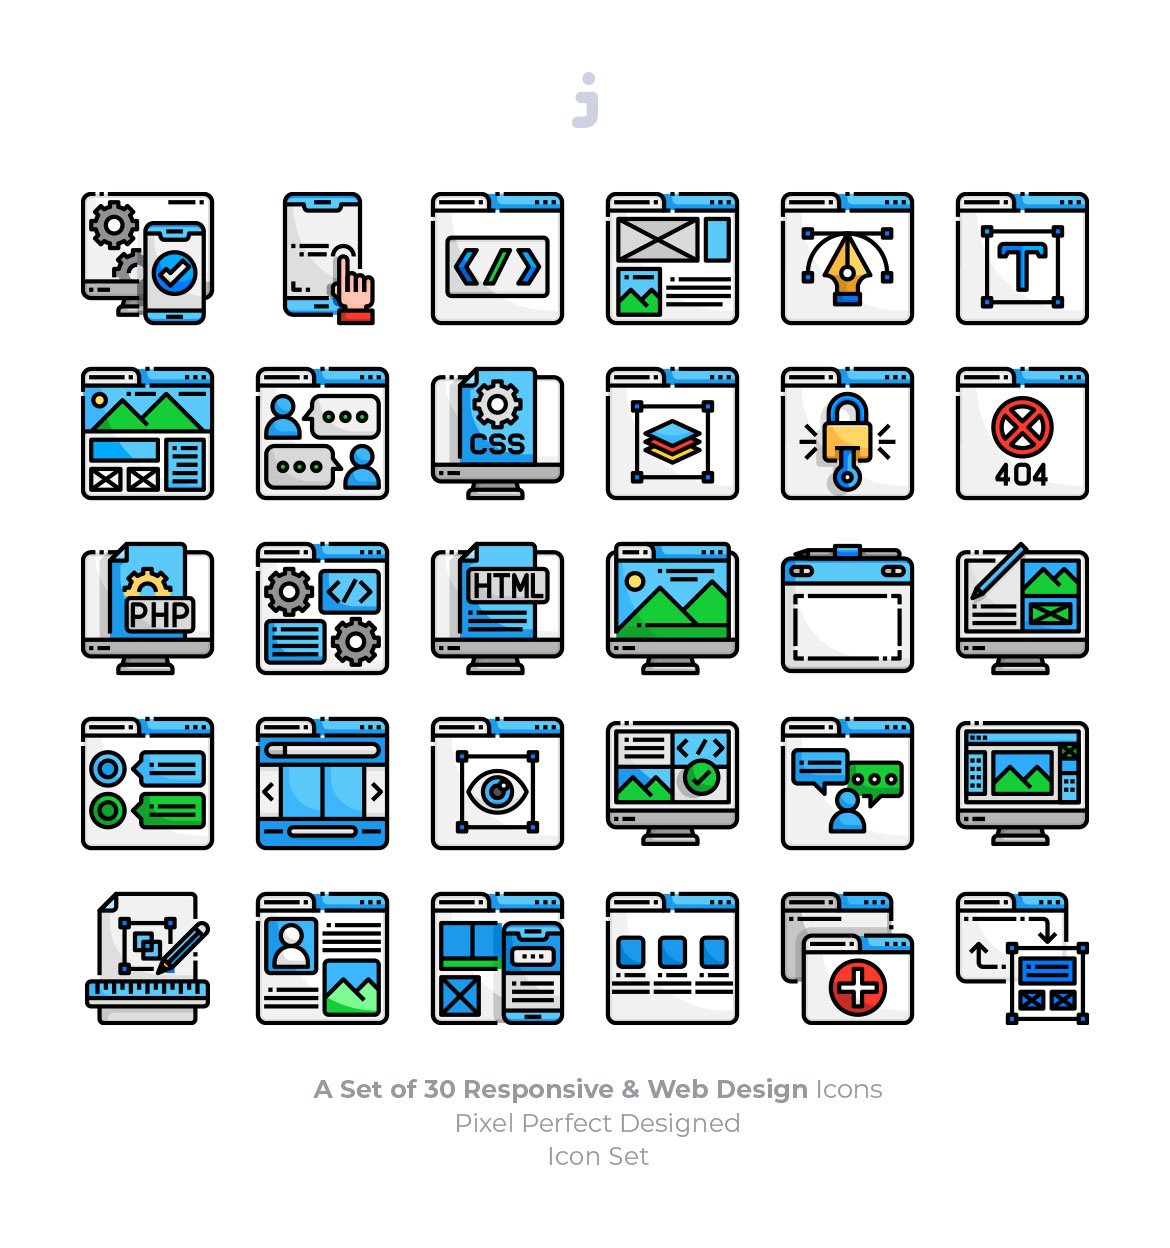 30 Responsive & Web Design Icon set preview image.